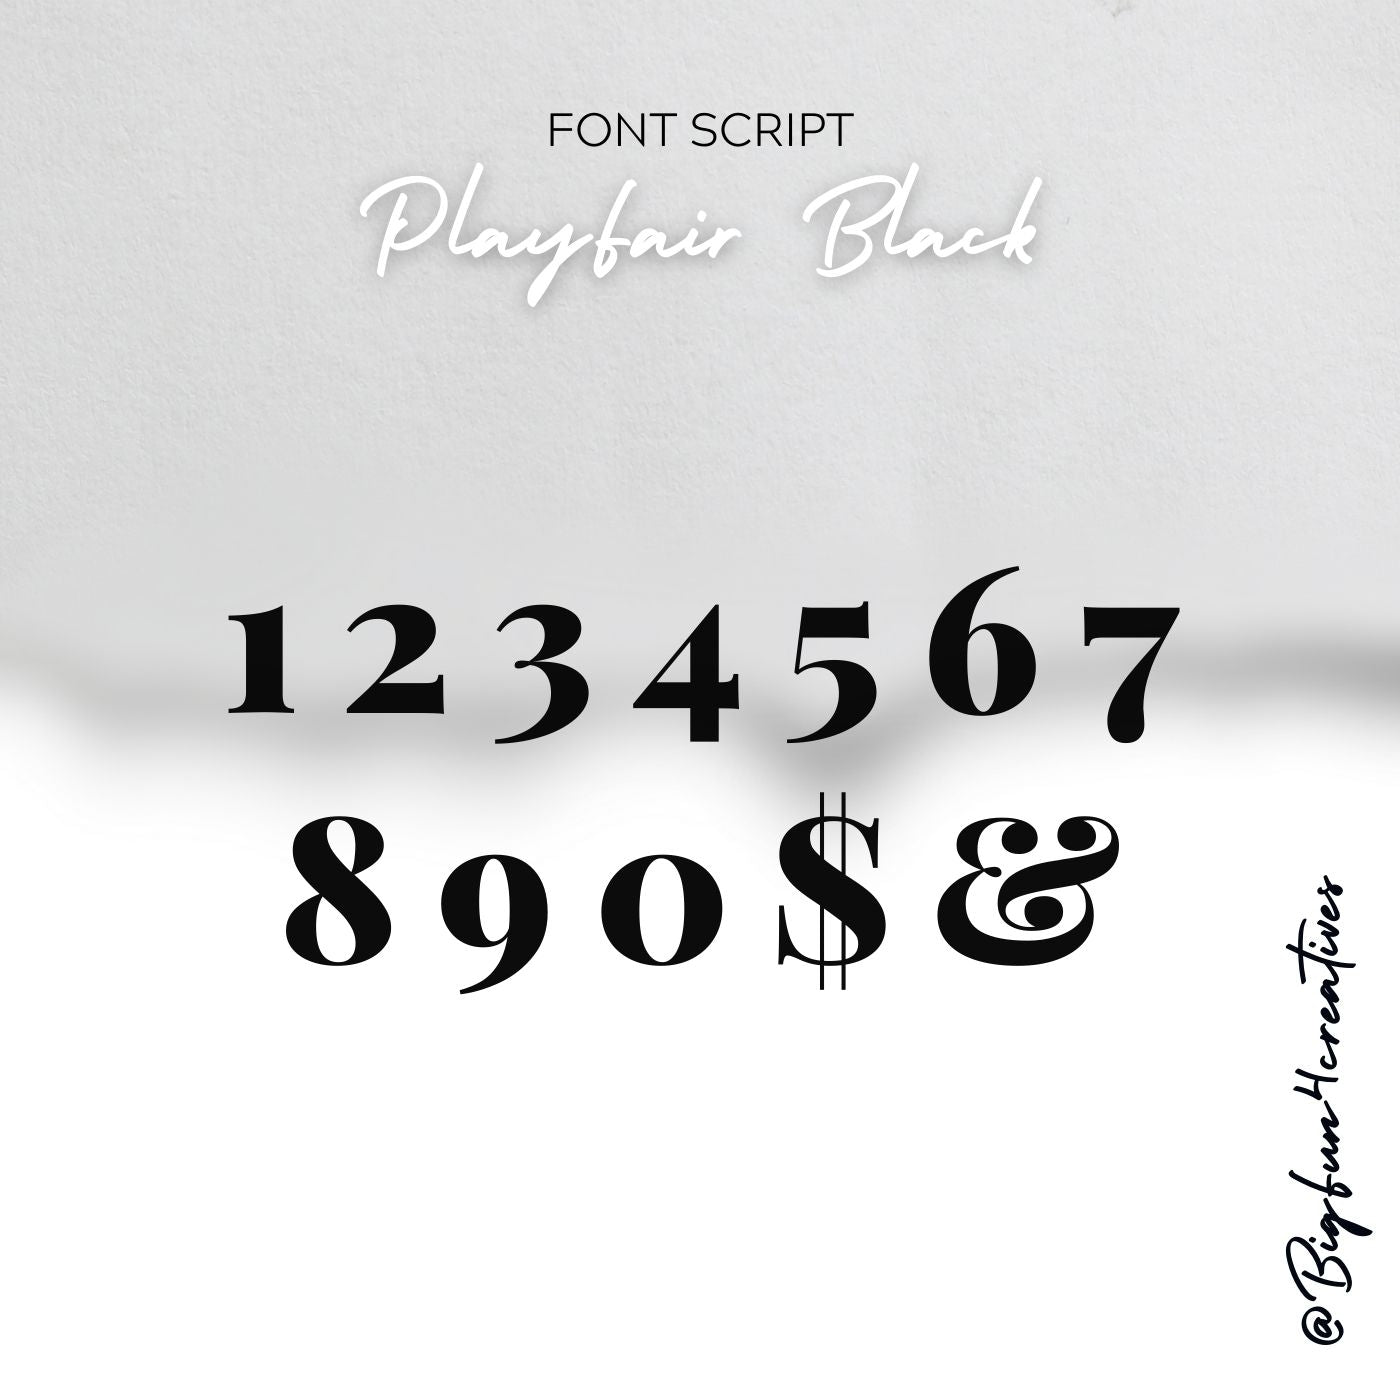 PlayFair Black Lettering Stencil Set